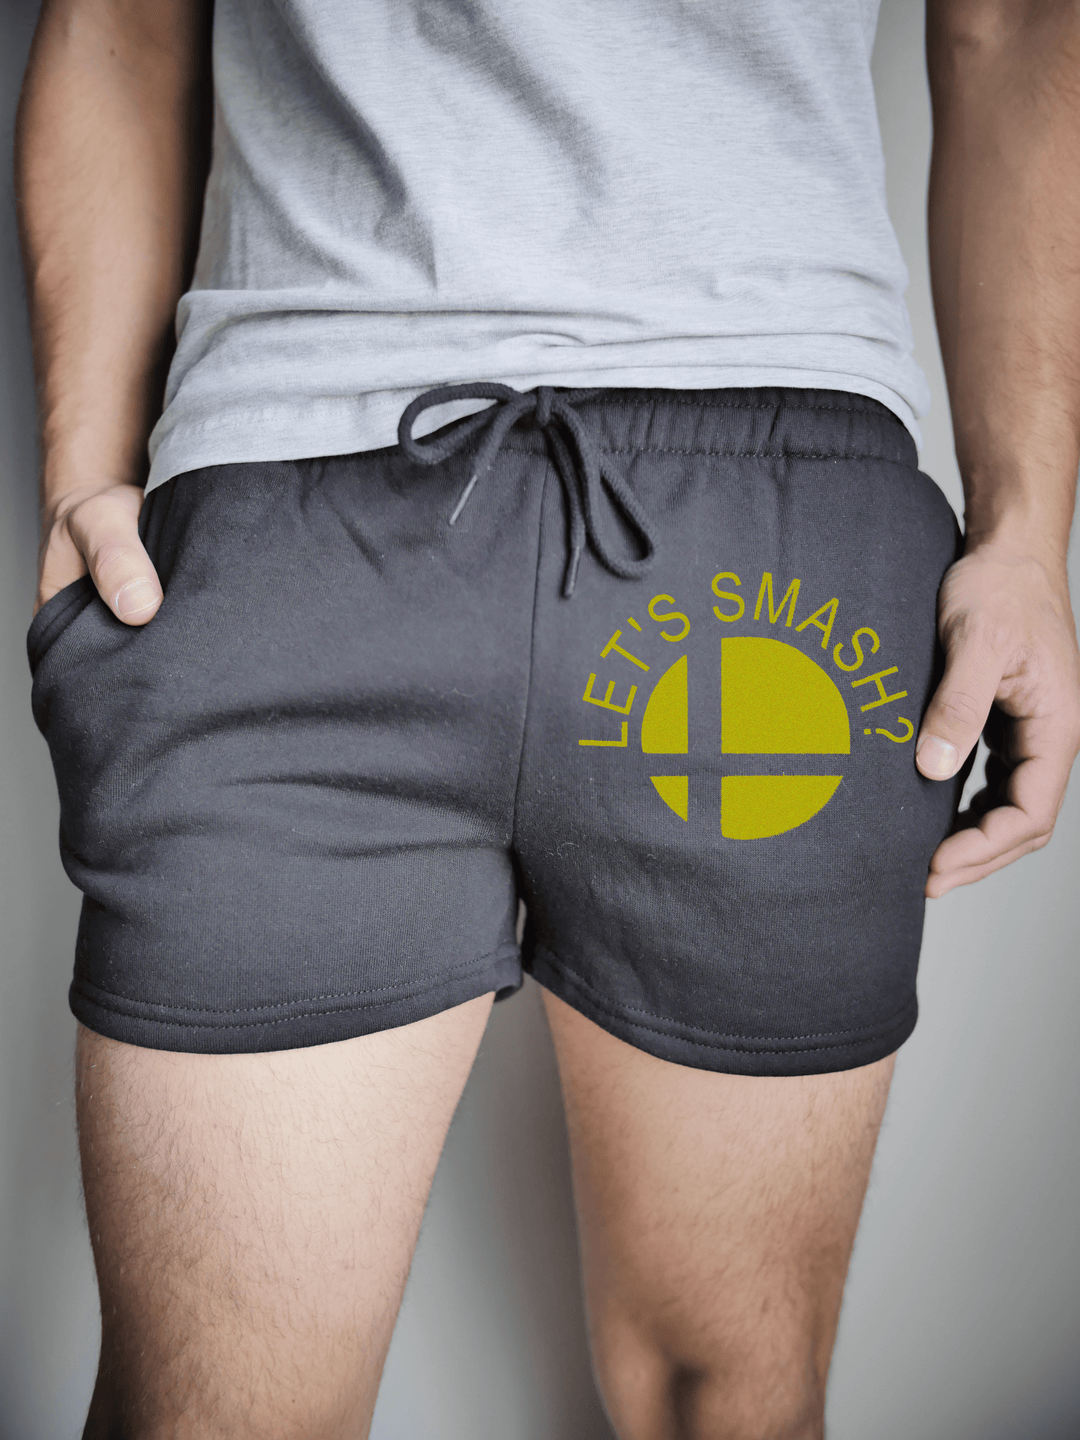 PixelThat Punderwear Shorts Black / S / Front Let's Smash Men's Gym Shorts